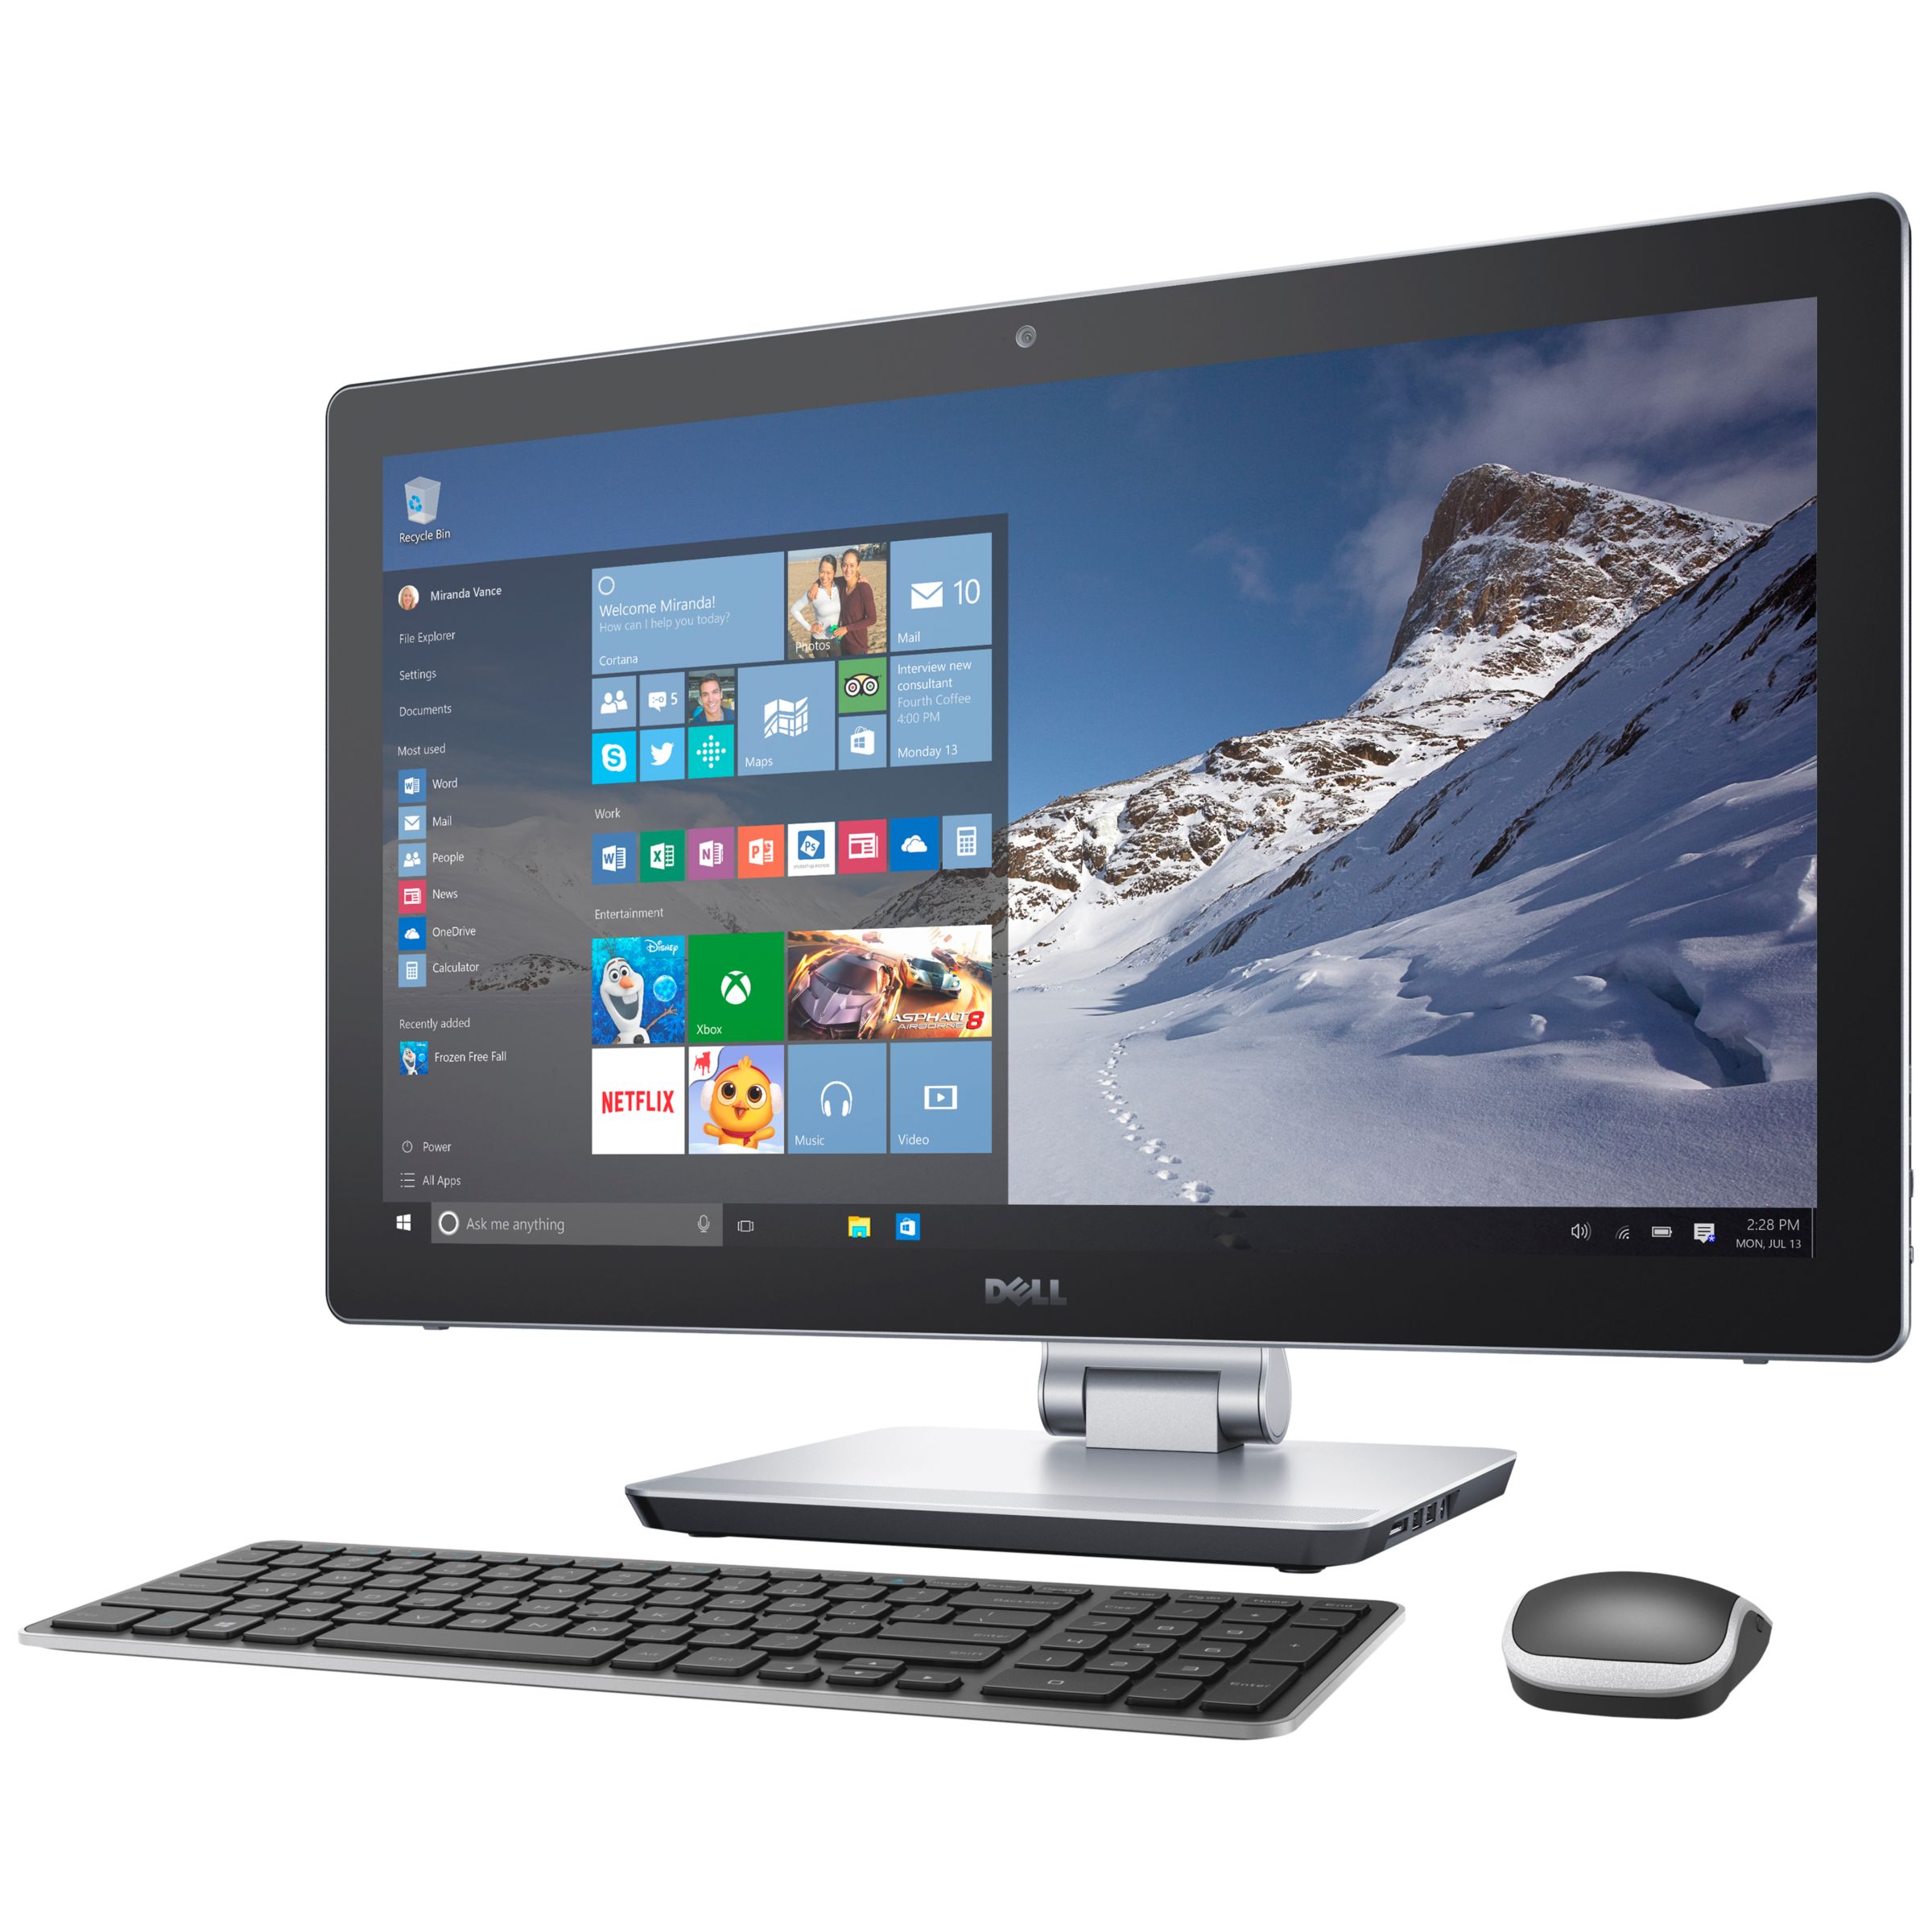 Dell Inspiron 24 7000 Series All-in-One Desktop PC, Intel Core i7, 16GB  RAM, 1TB HDD + 32GB SSD, 